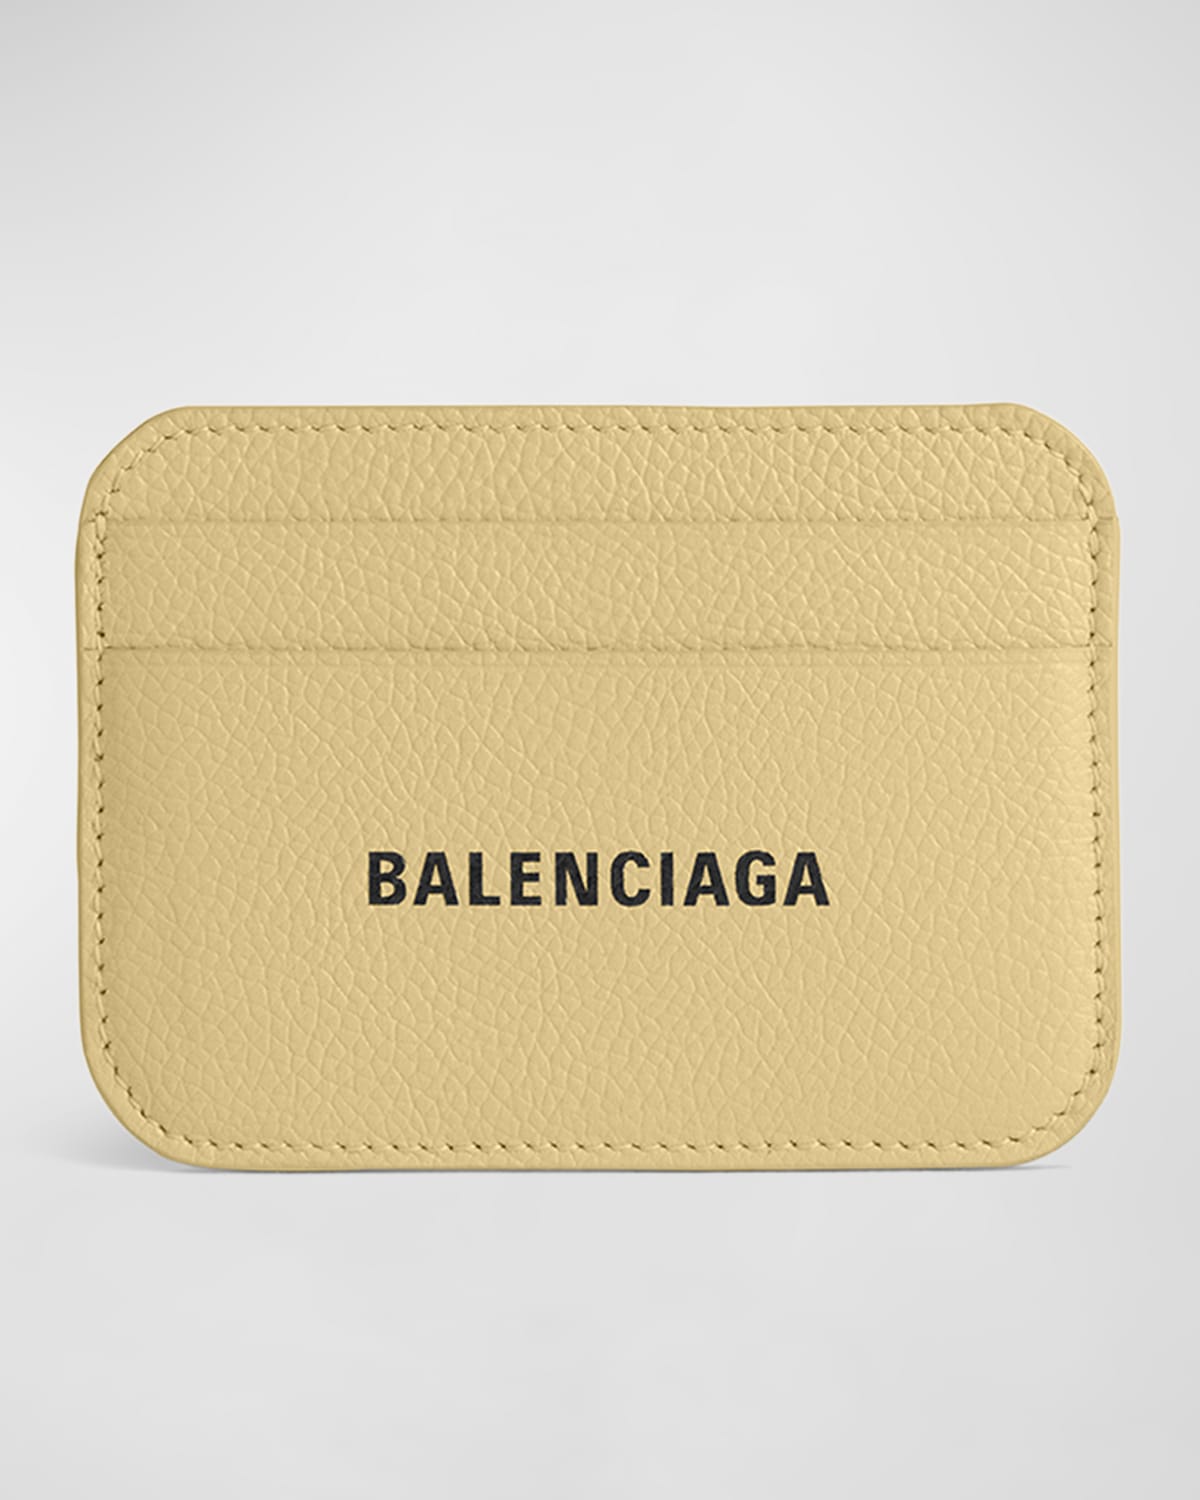 BALENCIAGA CASH CARD HOLDER - GRAINED CALF